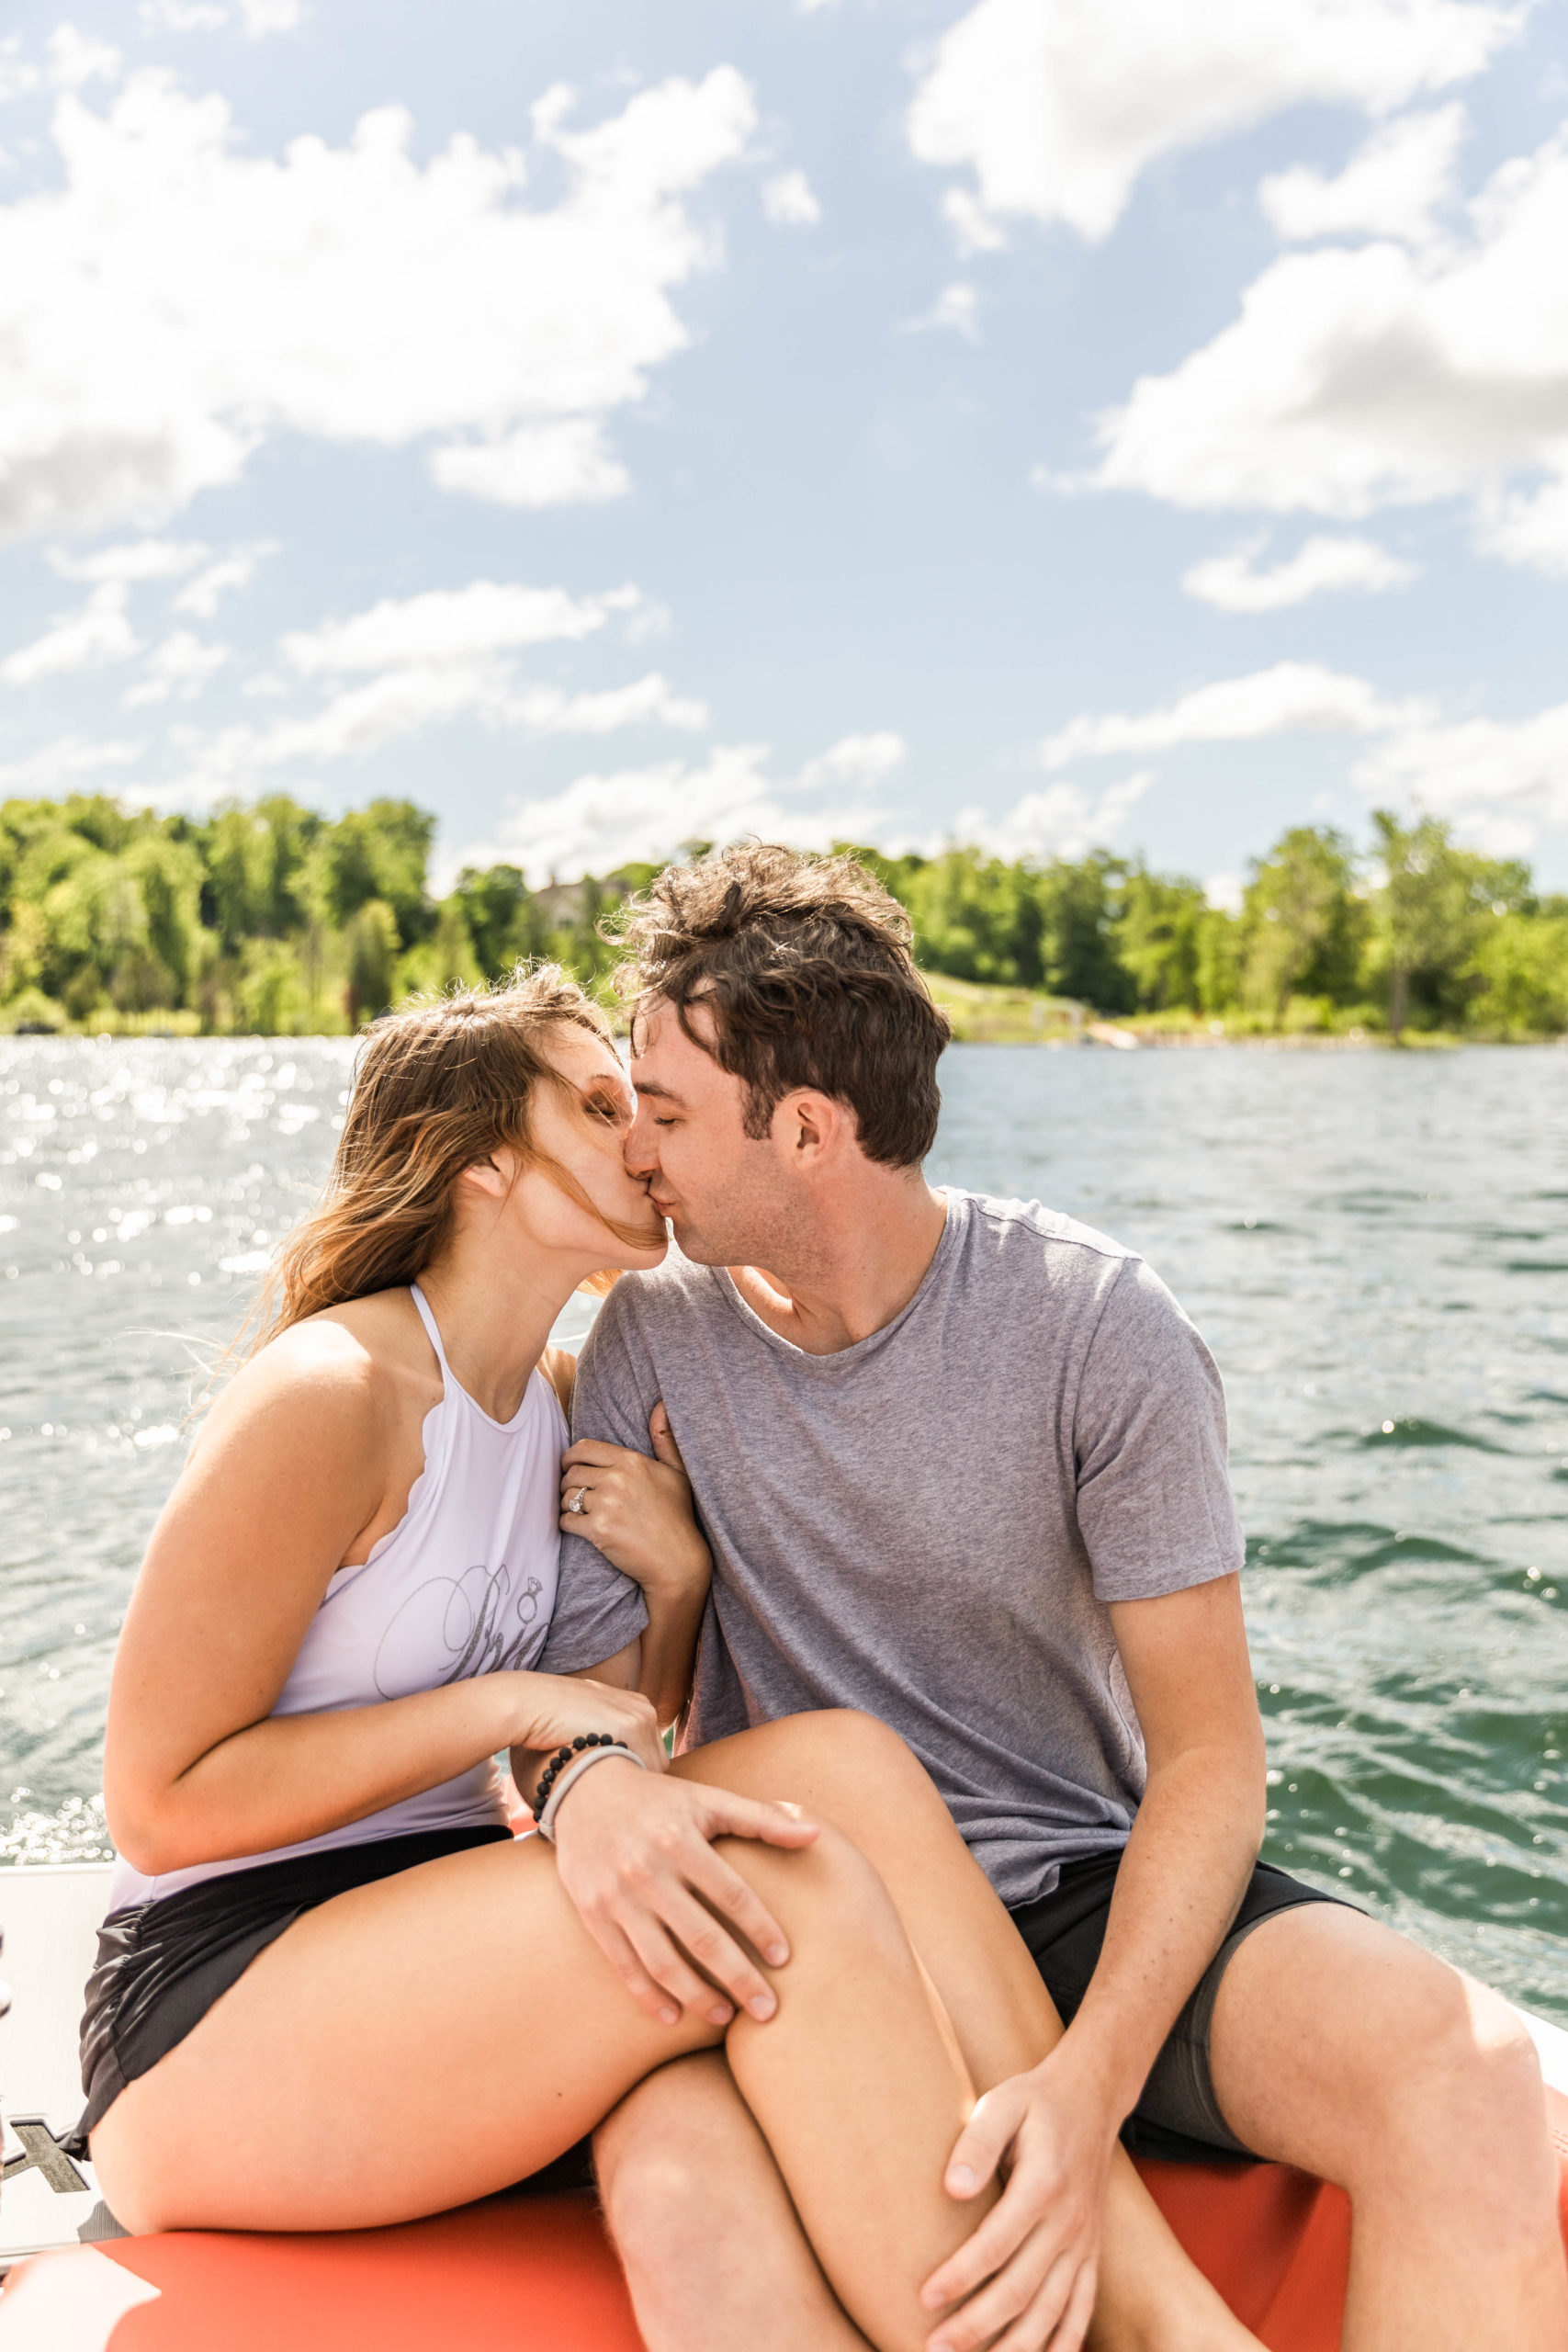 couple kissing on mastercraft boat in lake michigan surfign photoshoot